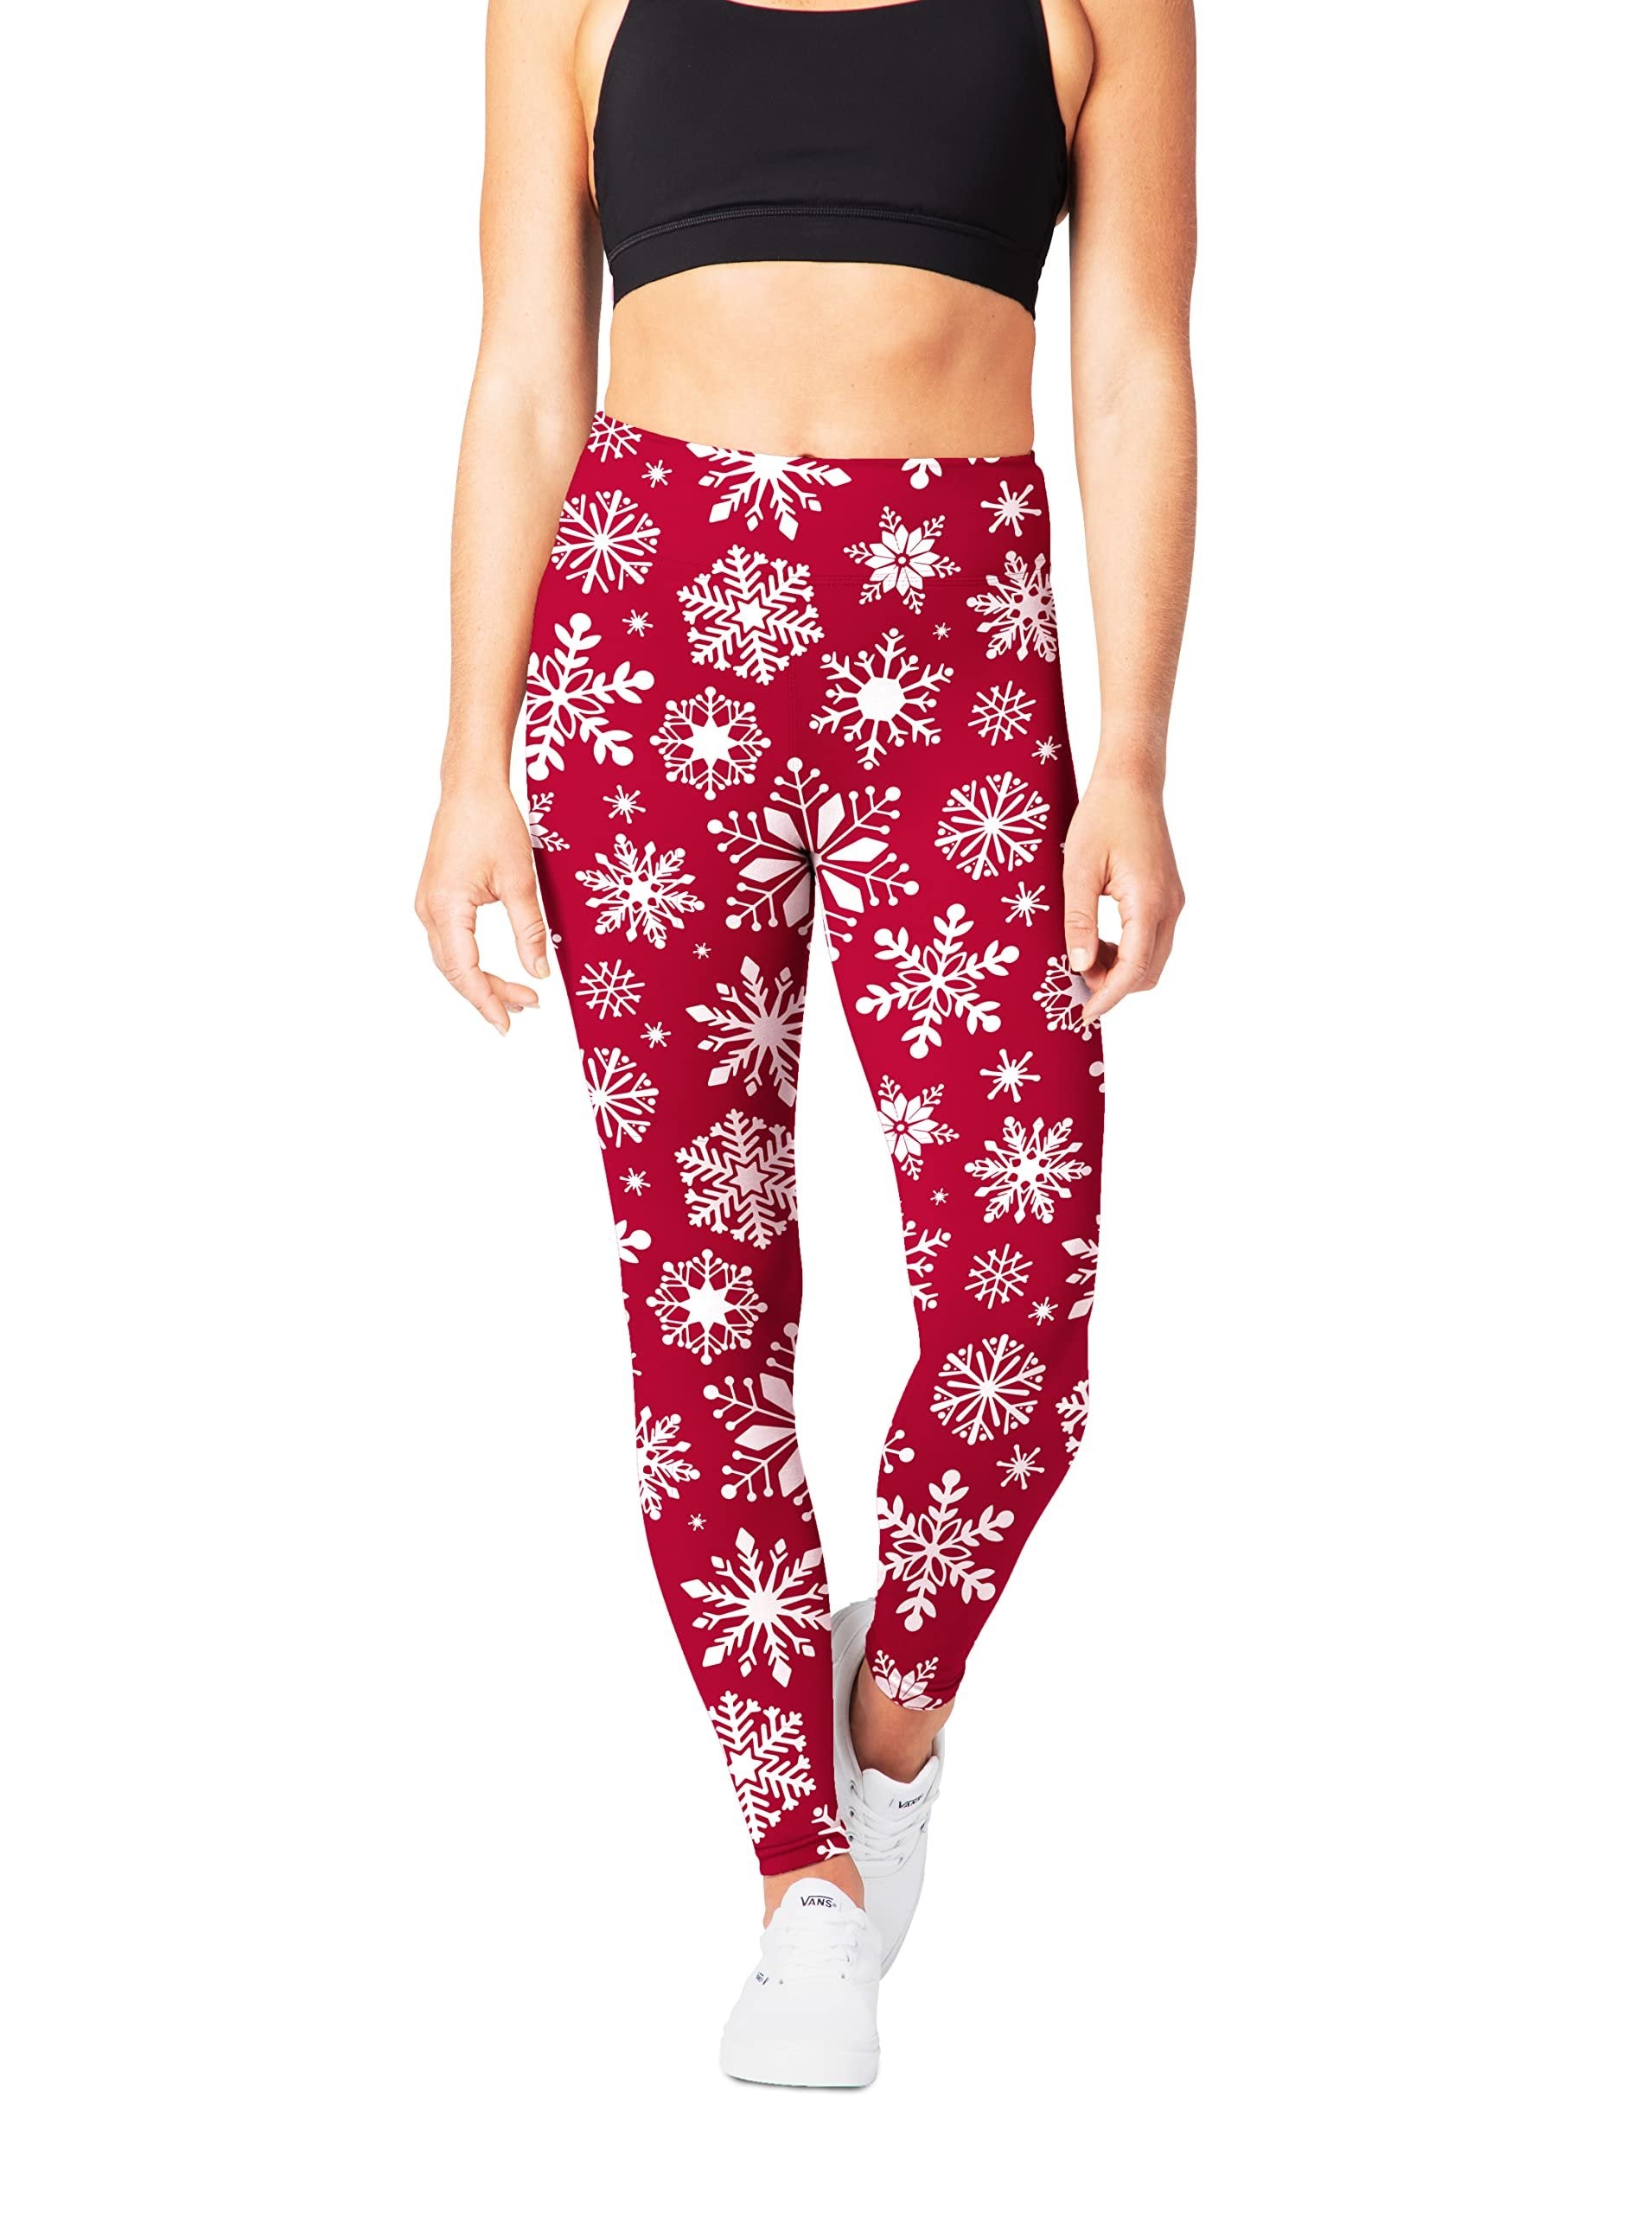 SATINA Christmas Leggings for Women - Buttery Soft Highwaisted Red Snowflake Holiday Leggings